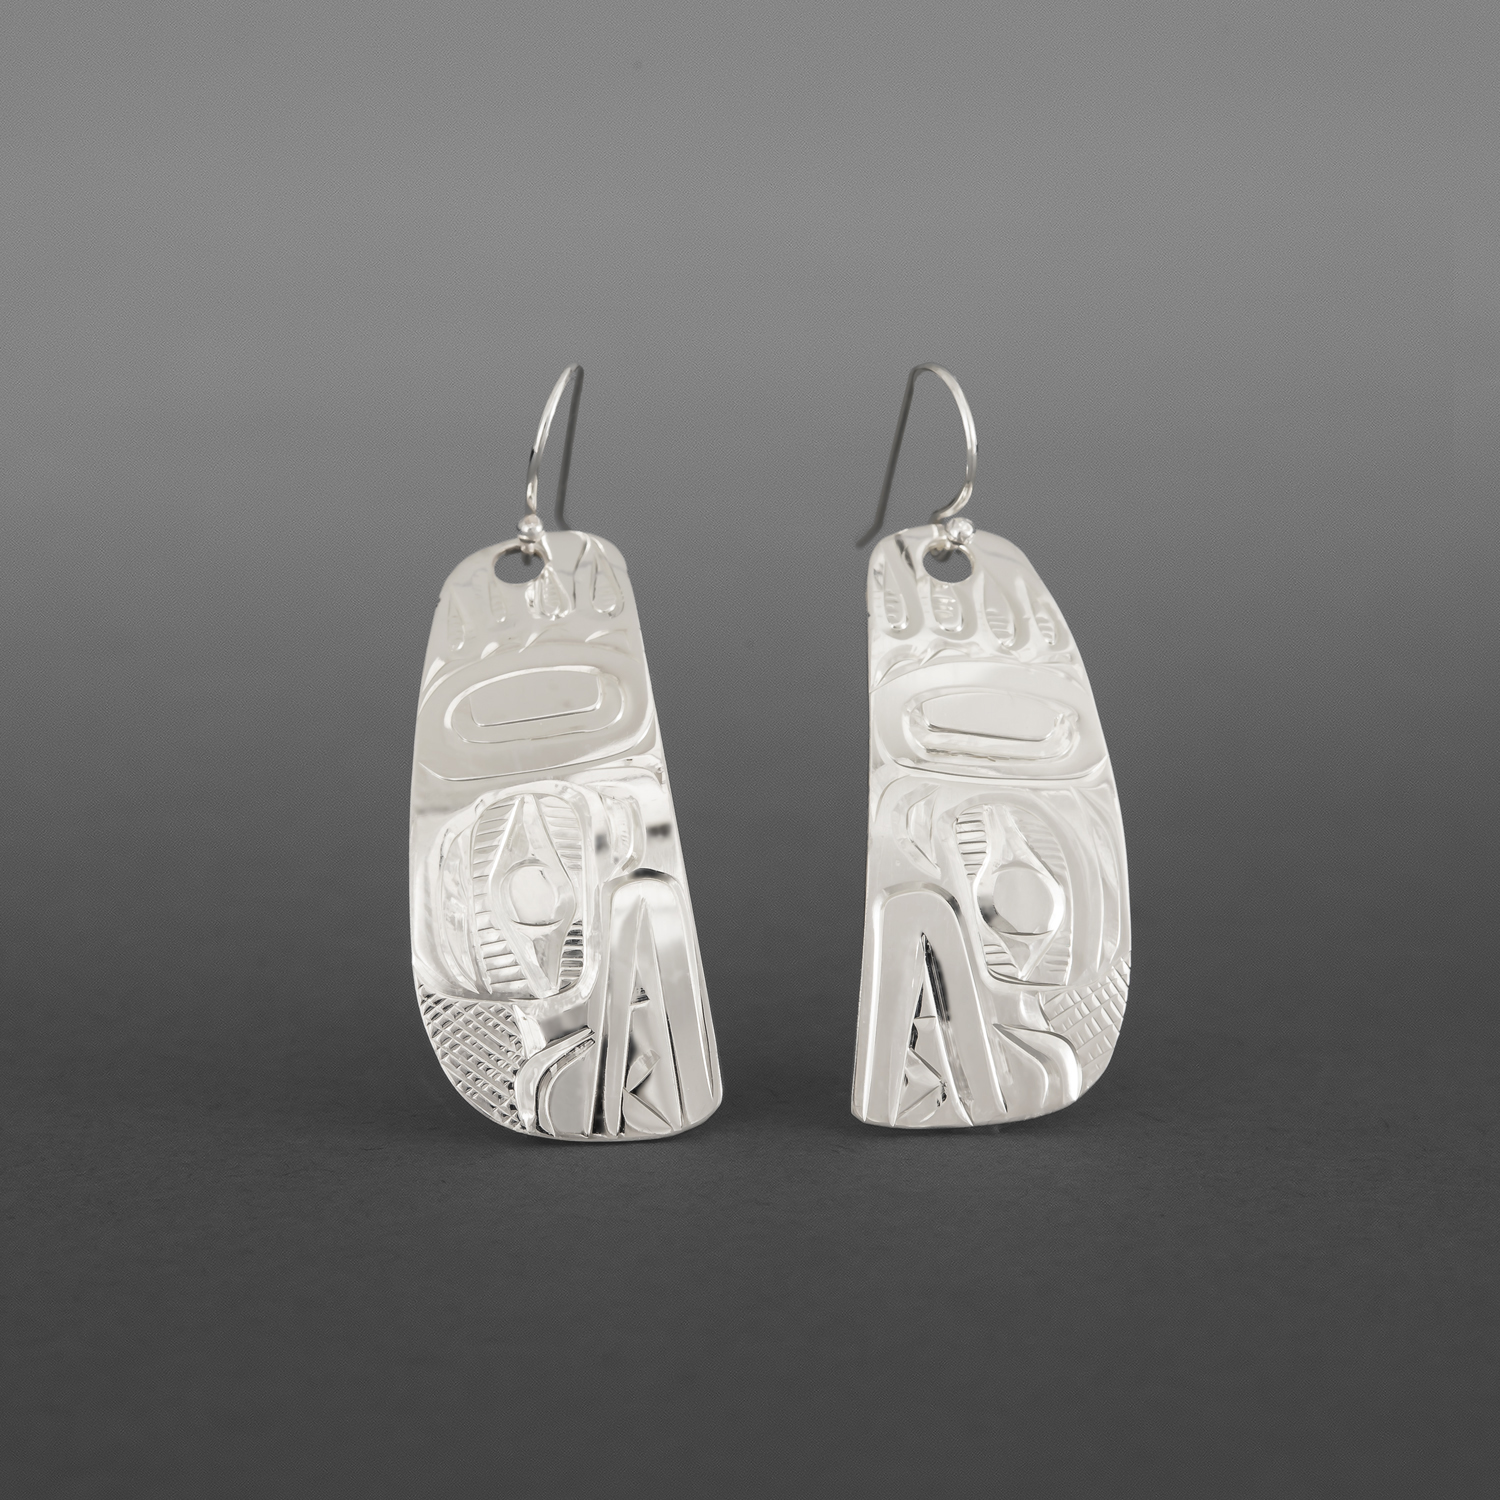 Bear Mother Earrings
Corrine Hunt
Kwakwaka'wakw/Tlingit
Sterling silver
1¼" x ½"
$250